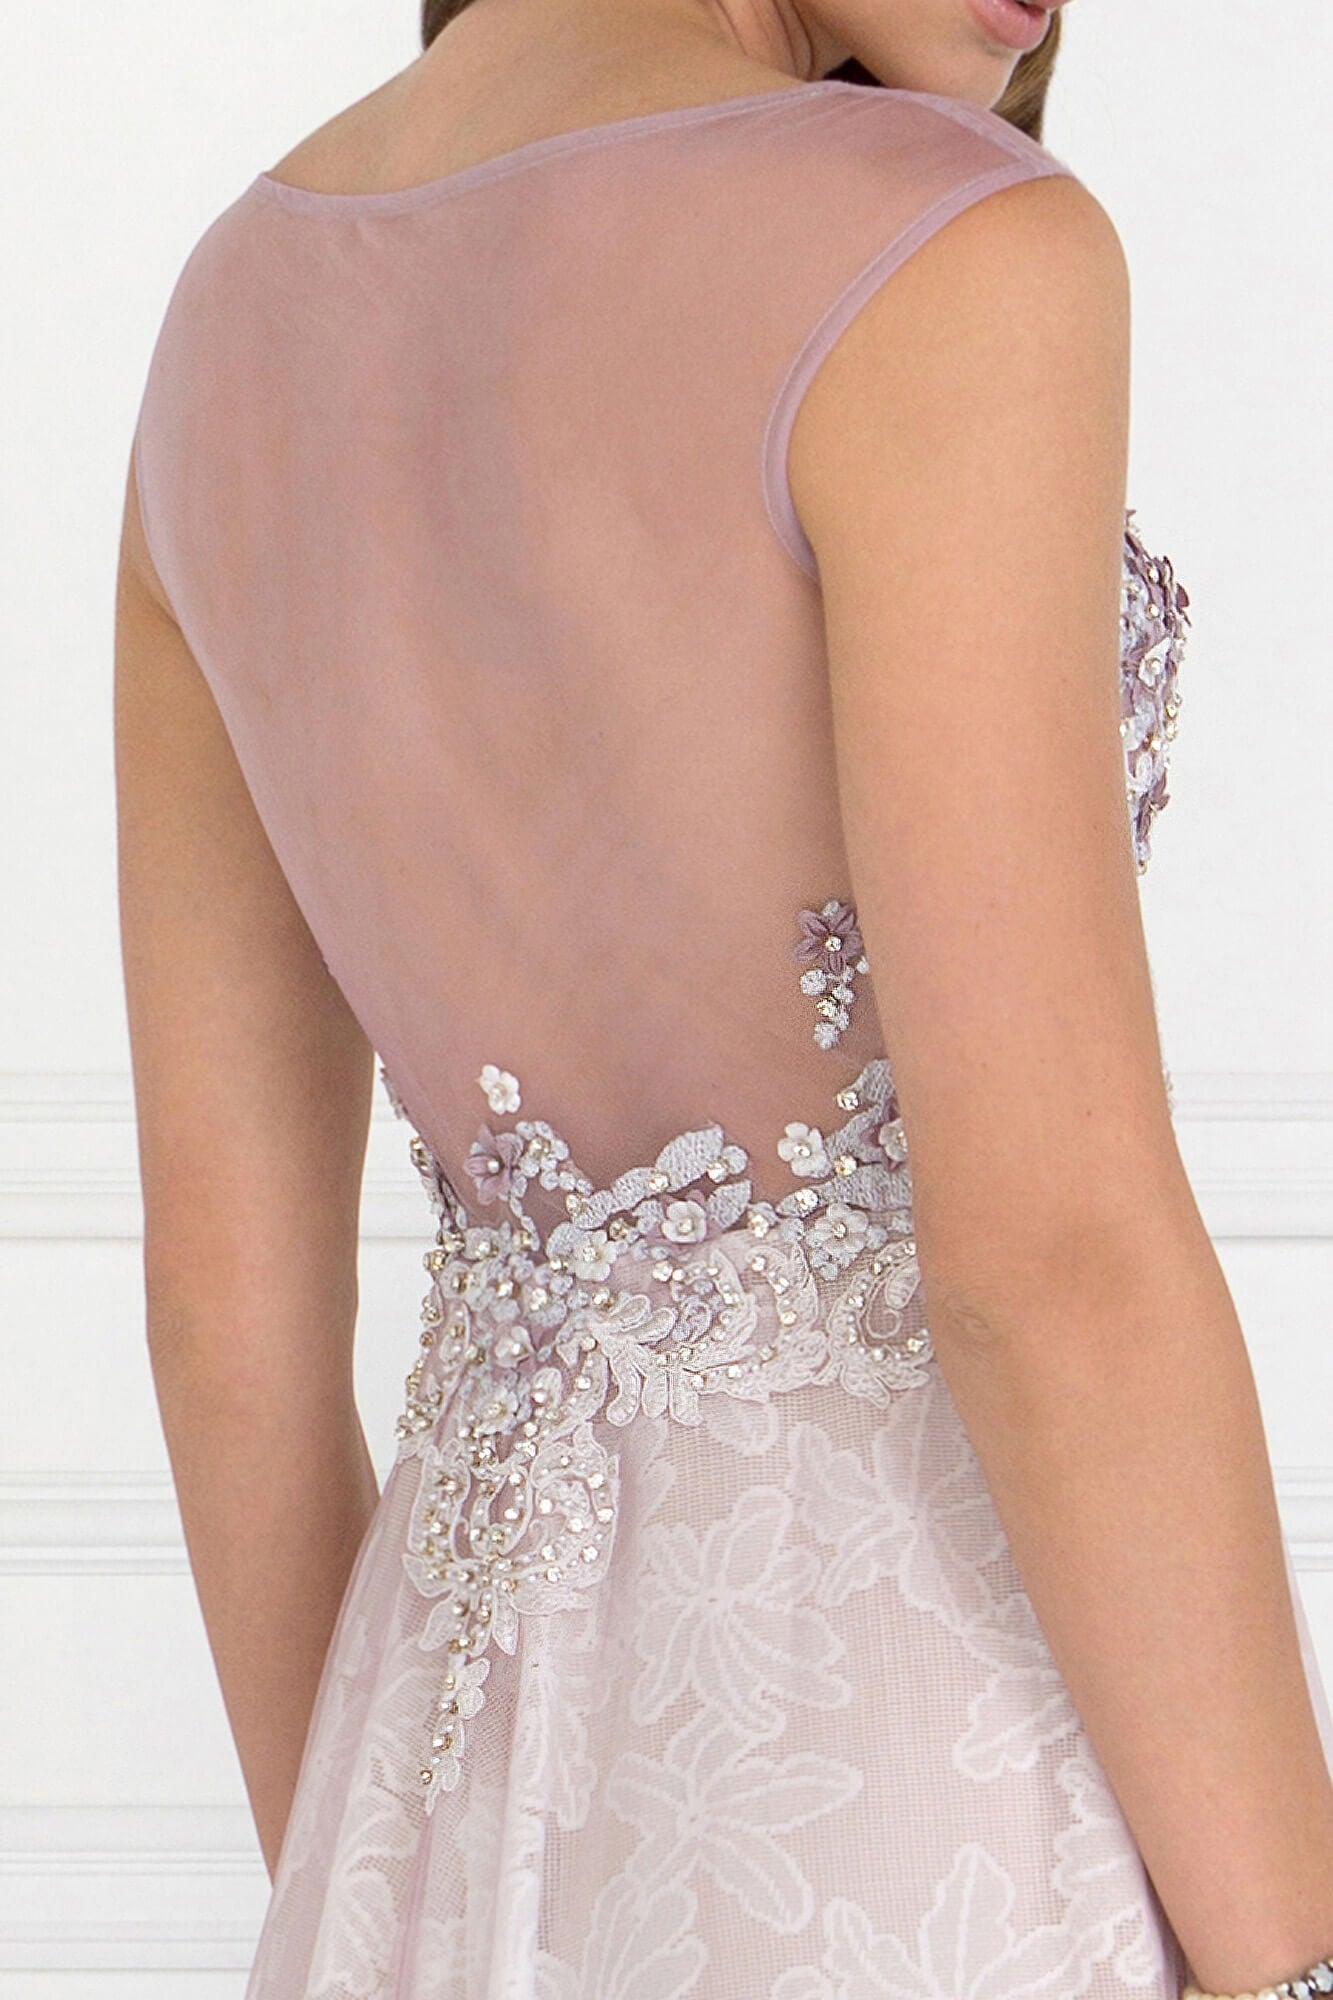 Prom Long Cap Sleeve Floral Lace Evening Formal Dress - The Dress Outlet Elizabeth K